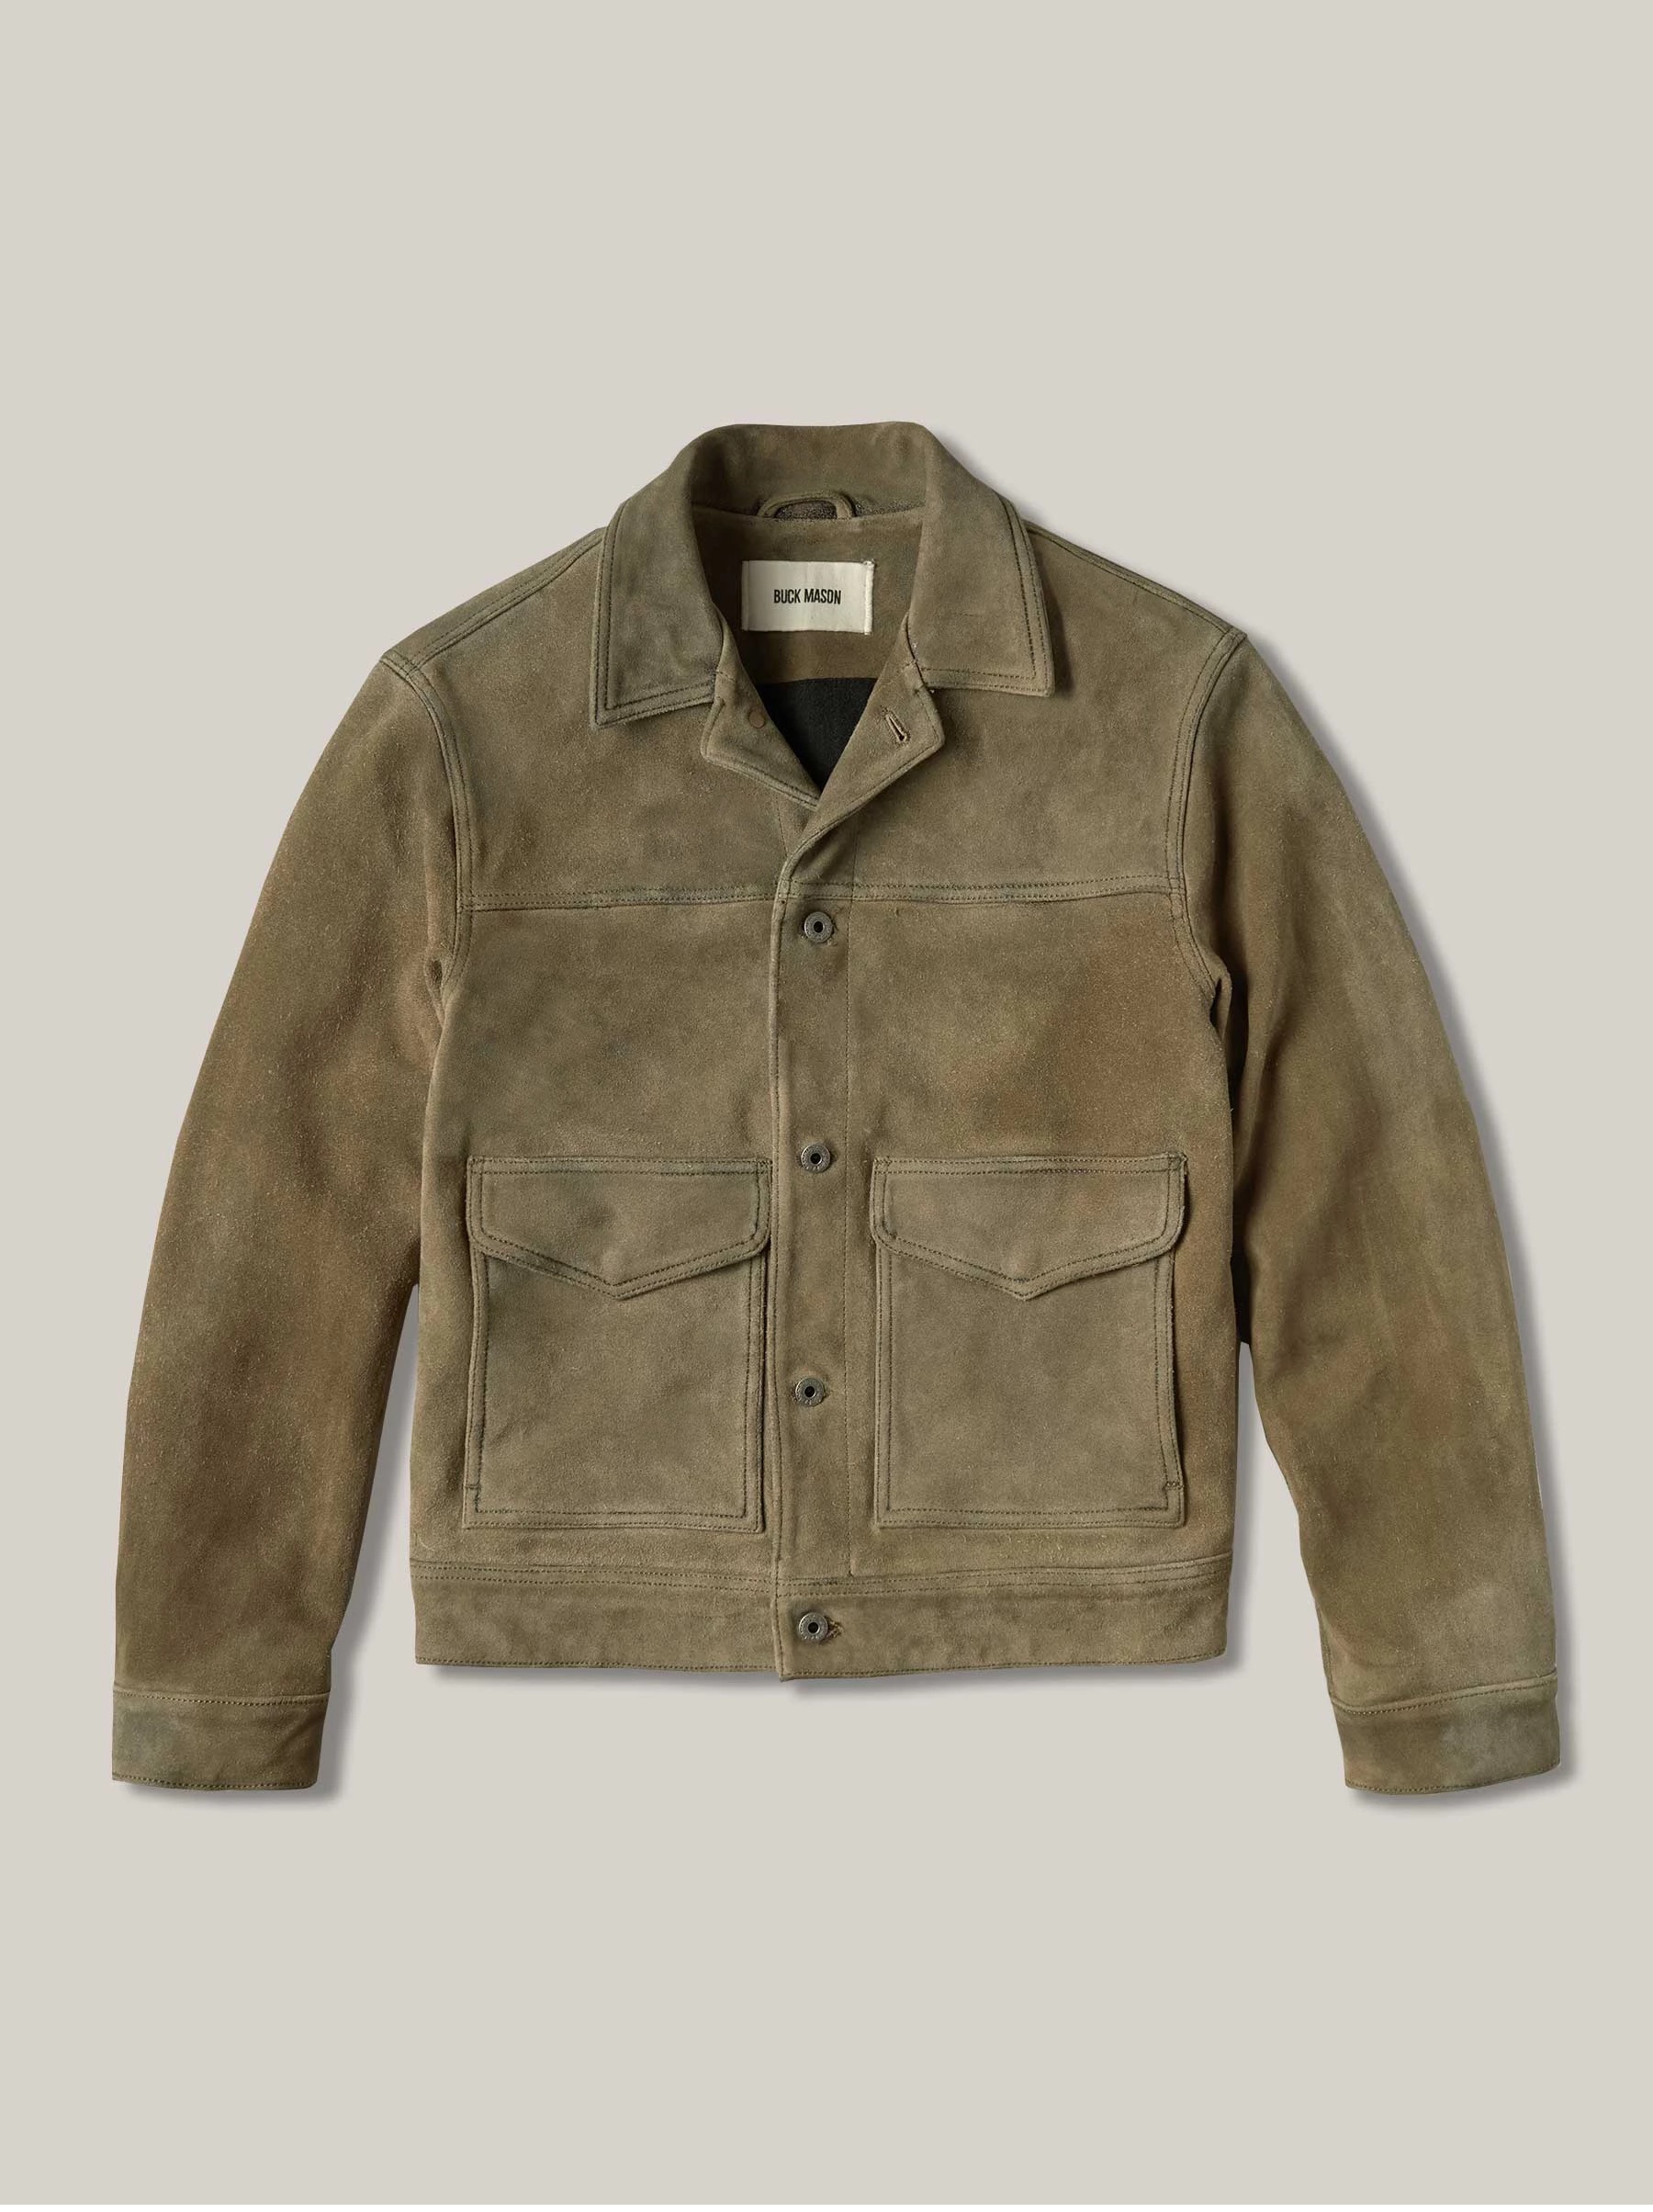 Buck Mason Interstate Vintage Suede Leather Jacket A2 Jackets